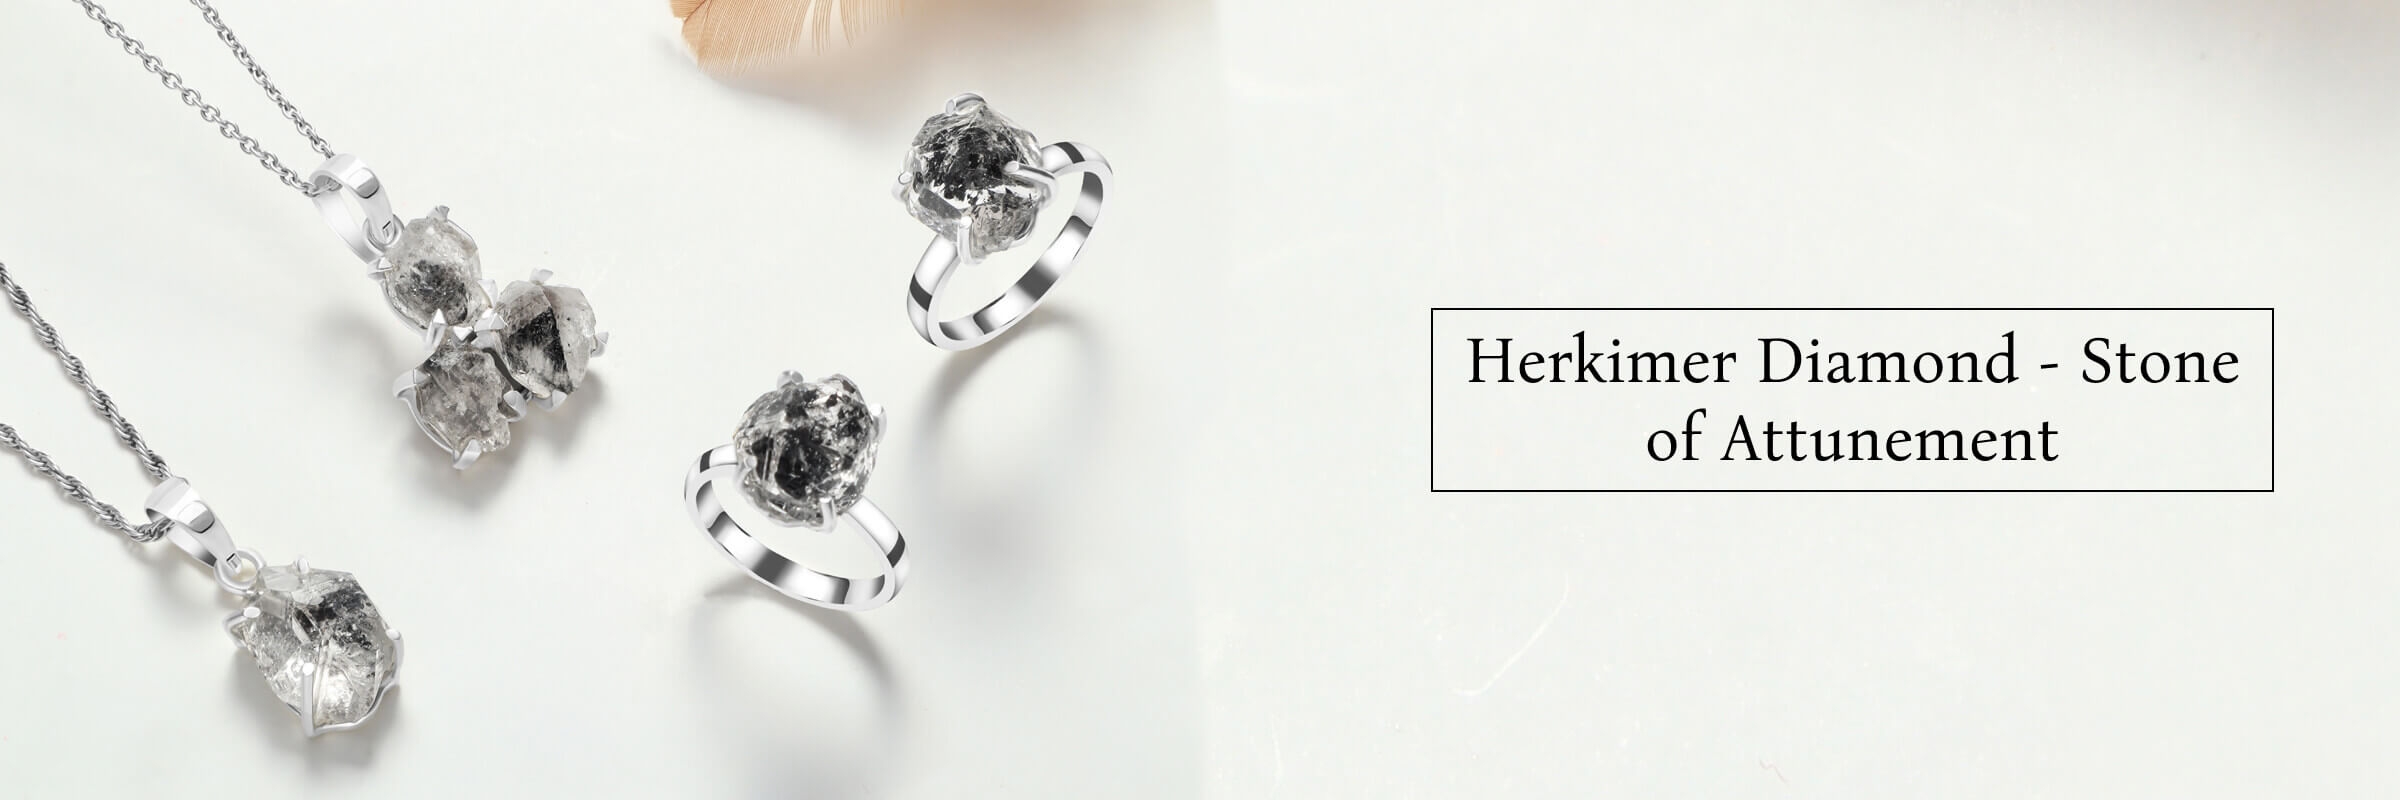 Herkimer diamond jewelry